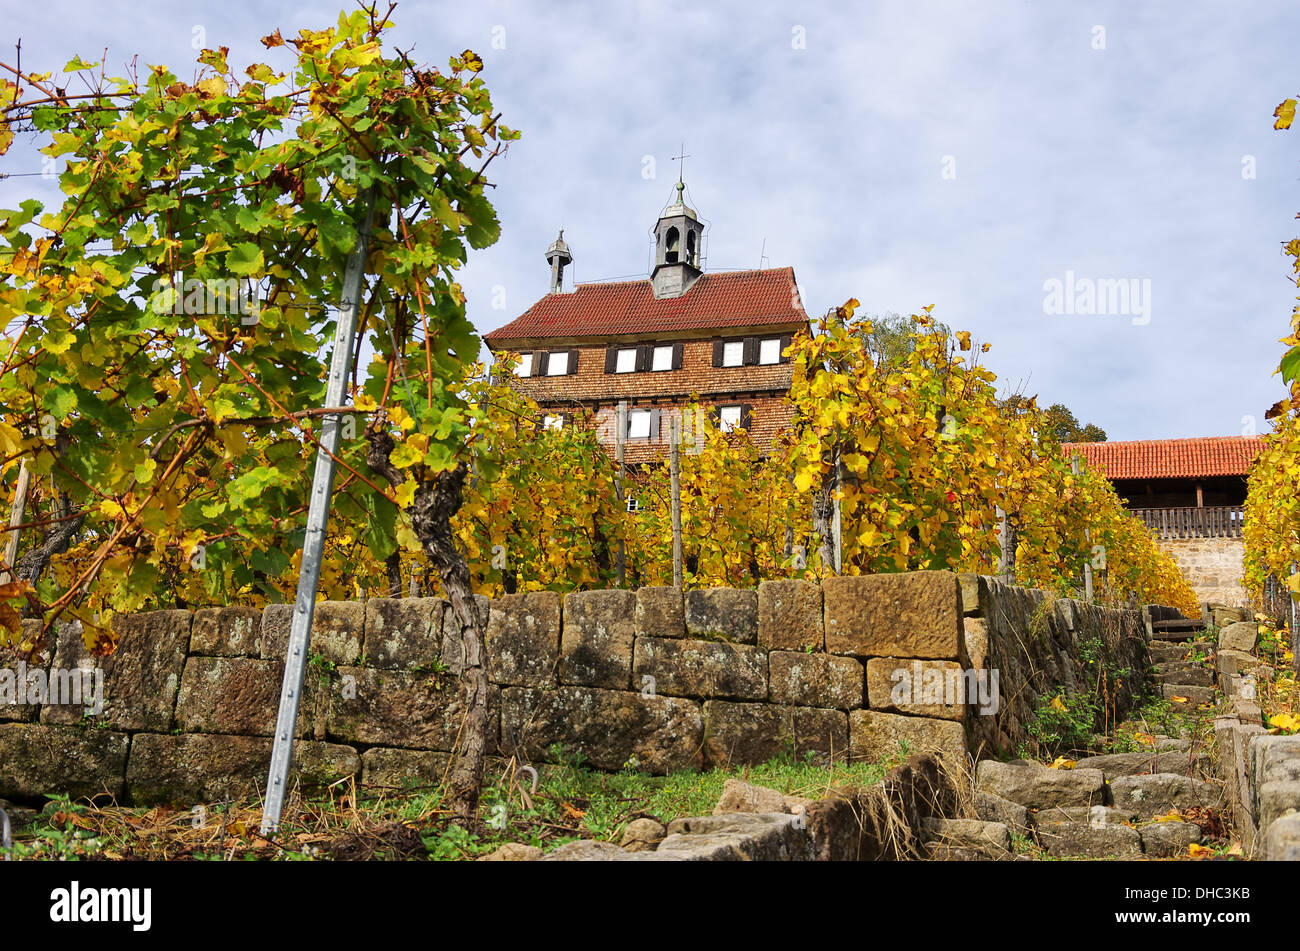 Castle And Vineyard, Esslingen, Germany Stock Photo